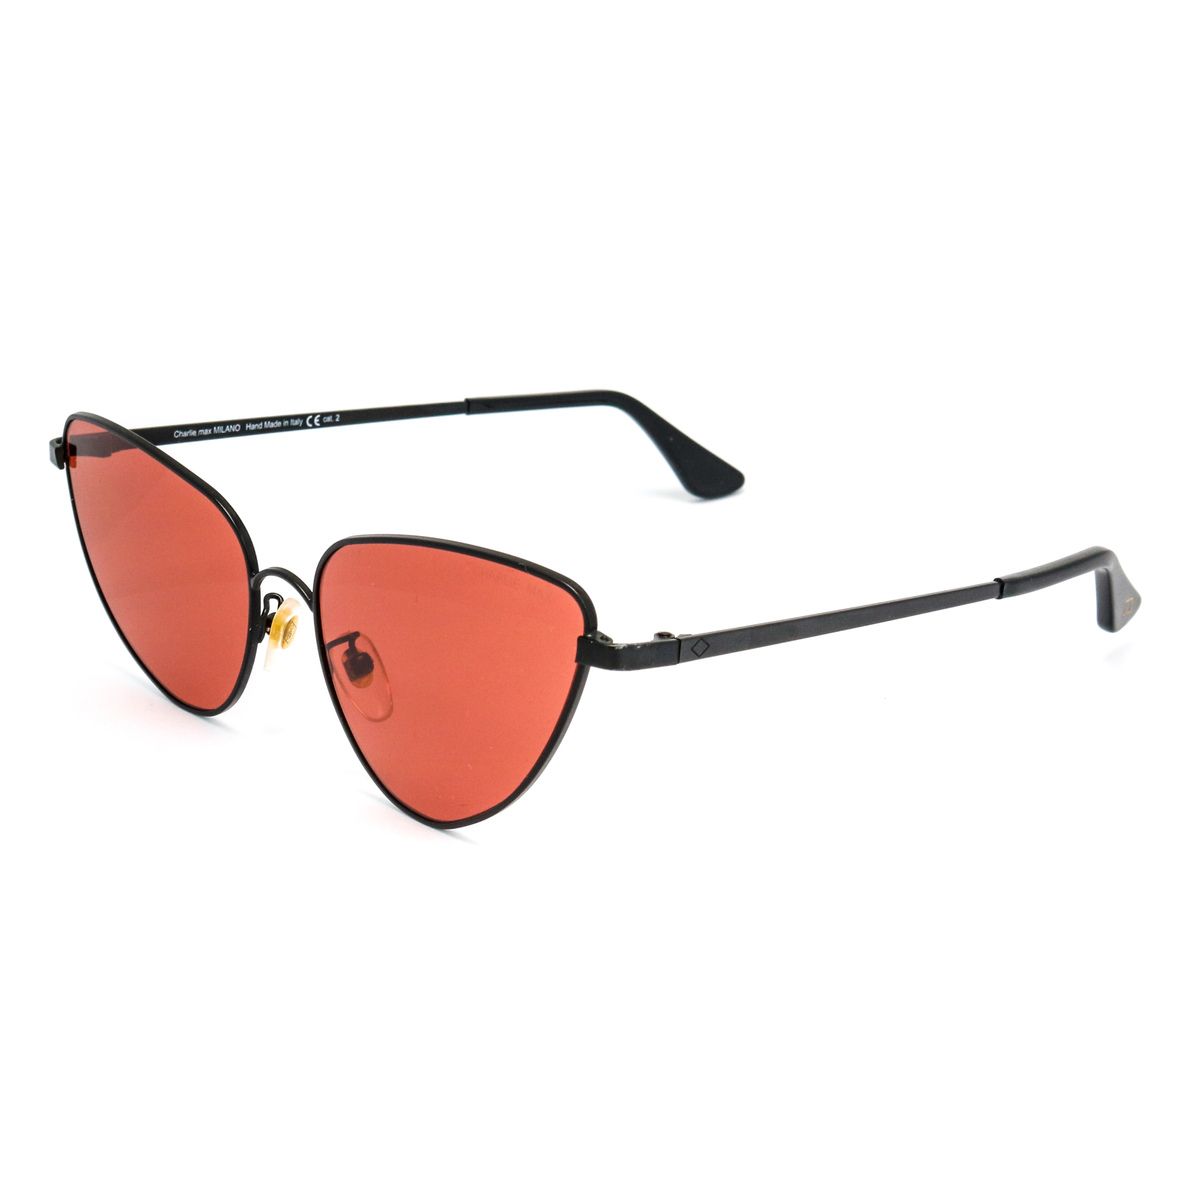 LITAA Cat Eye Sunglasses BL R72 - size 58